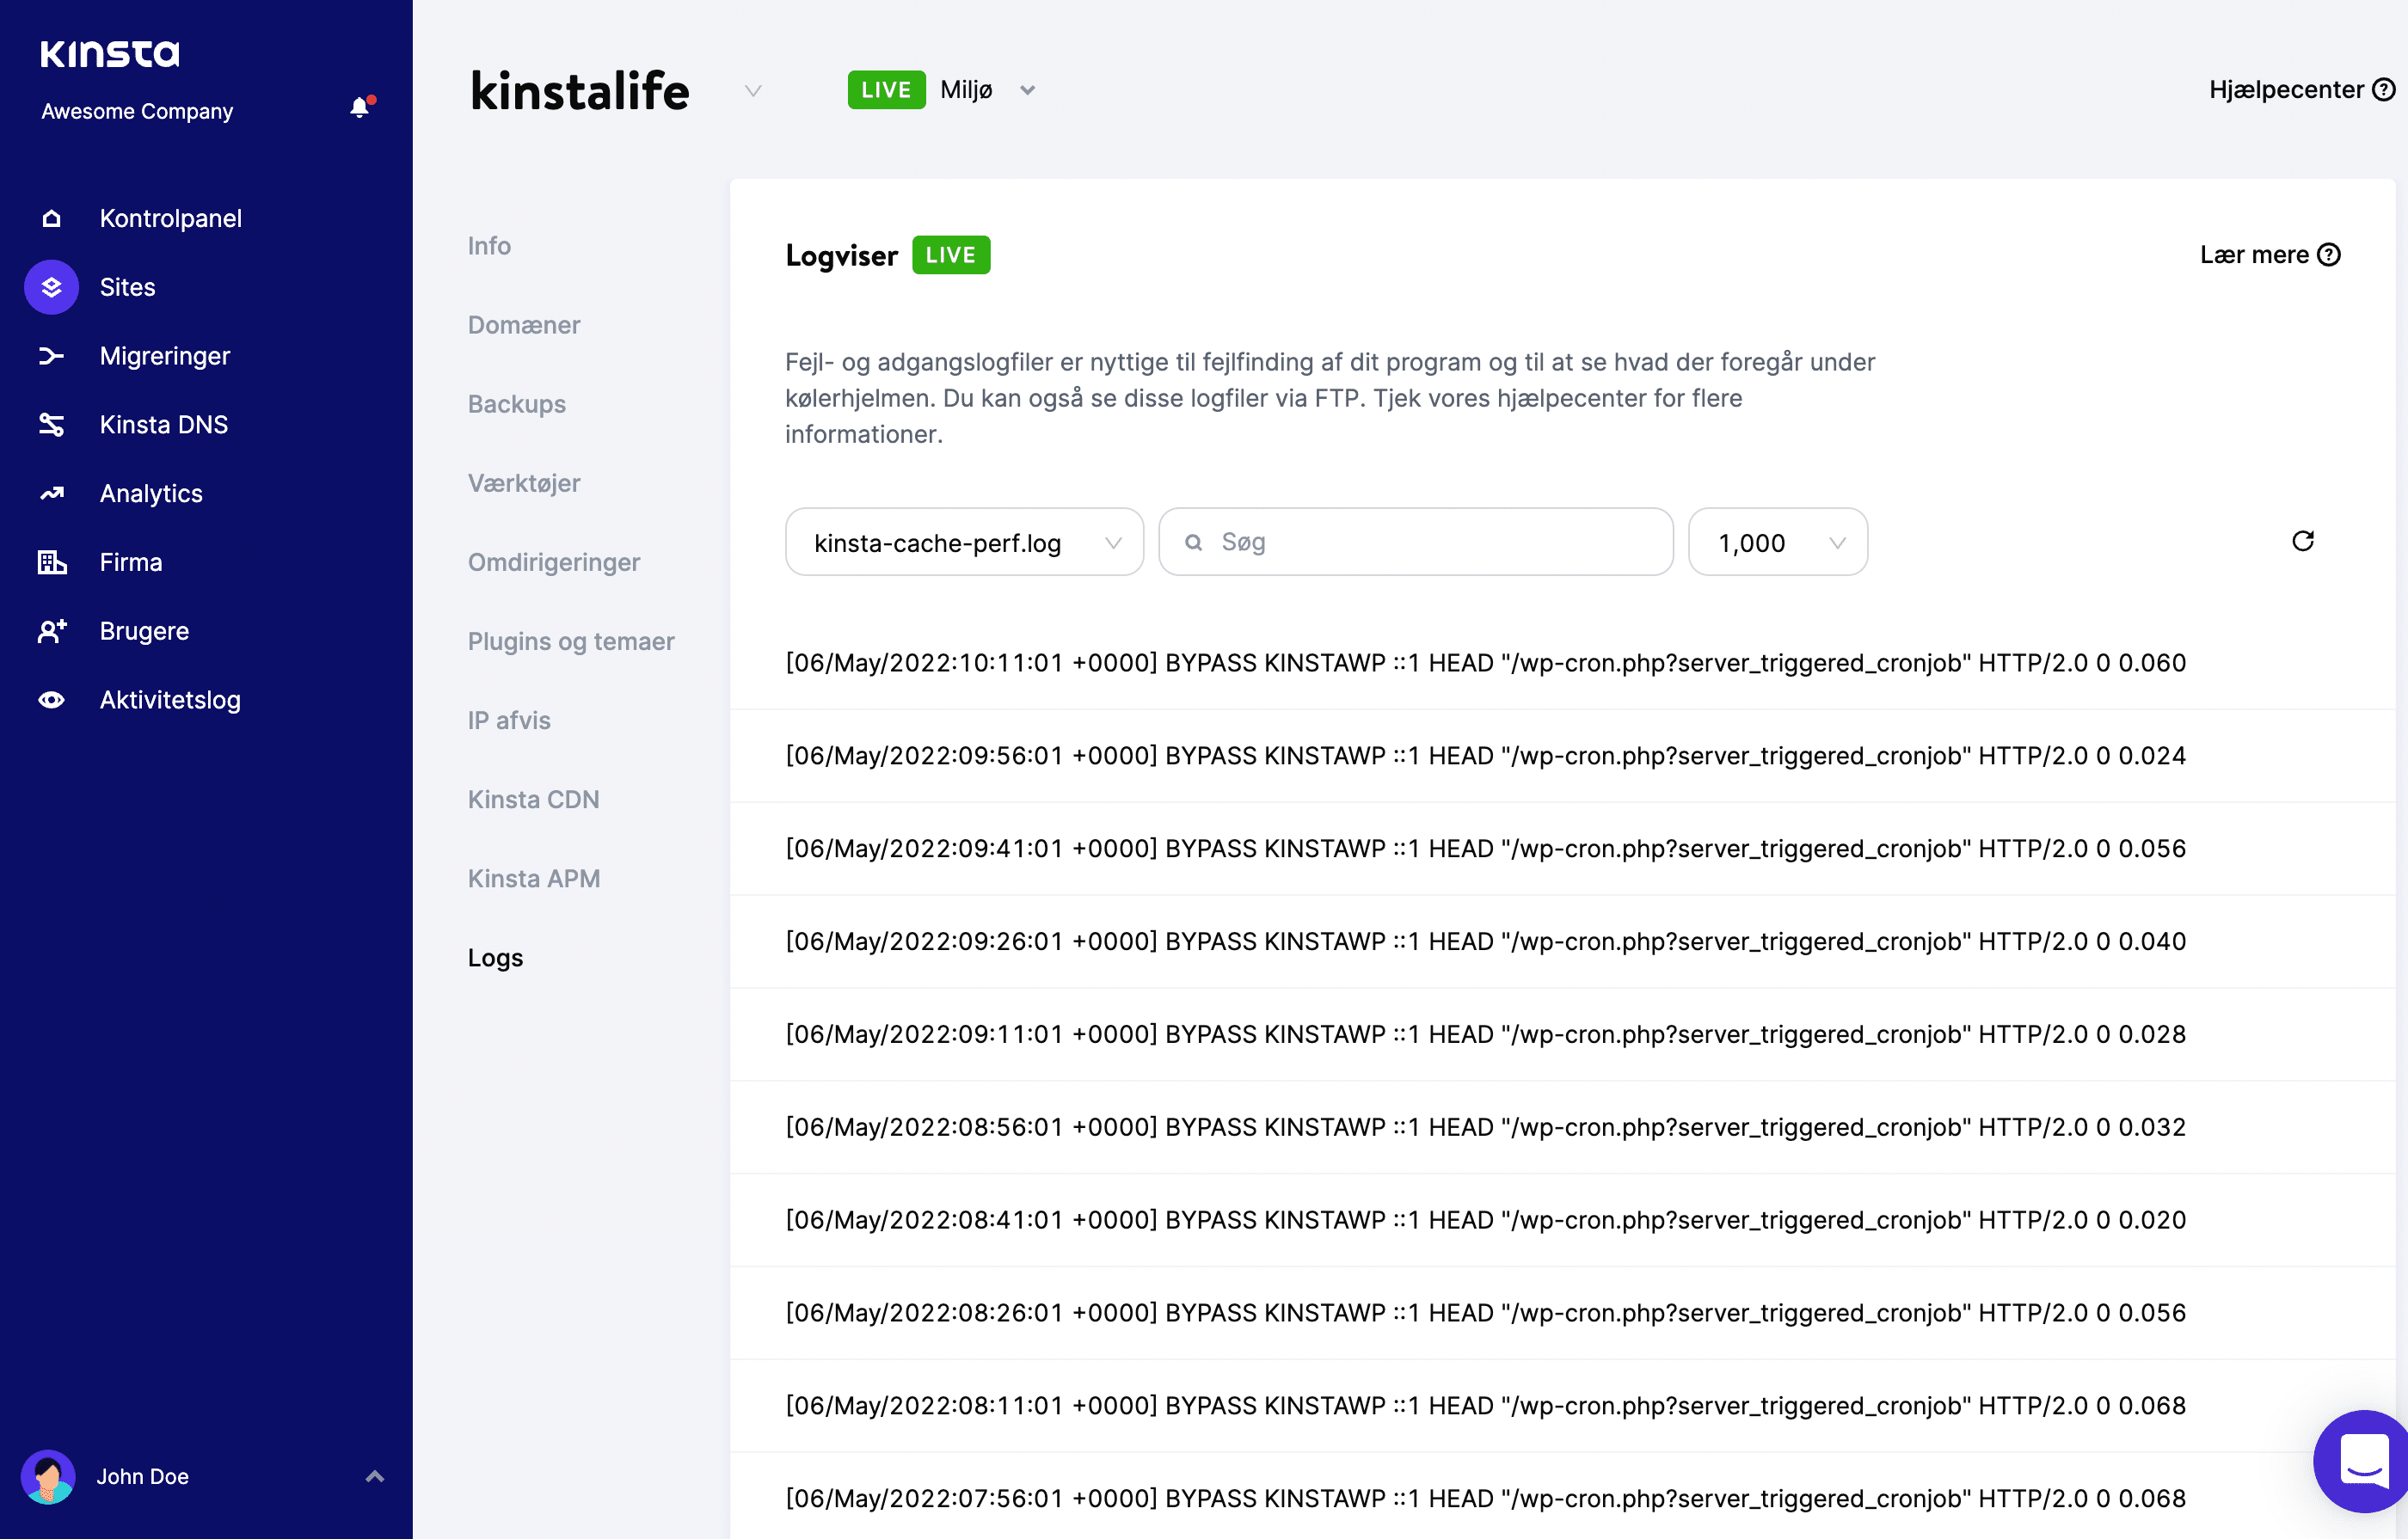 kinsta-cache-perf.log fil i MyKinsta Logviser.